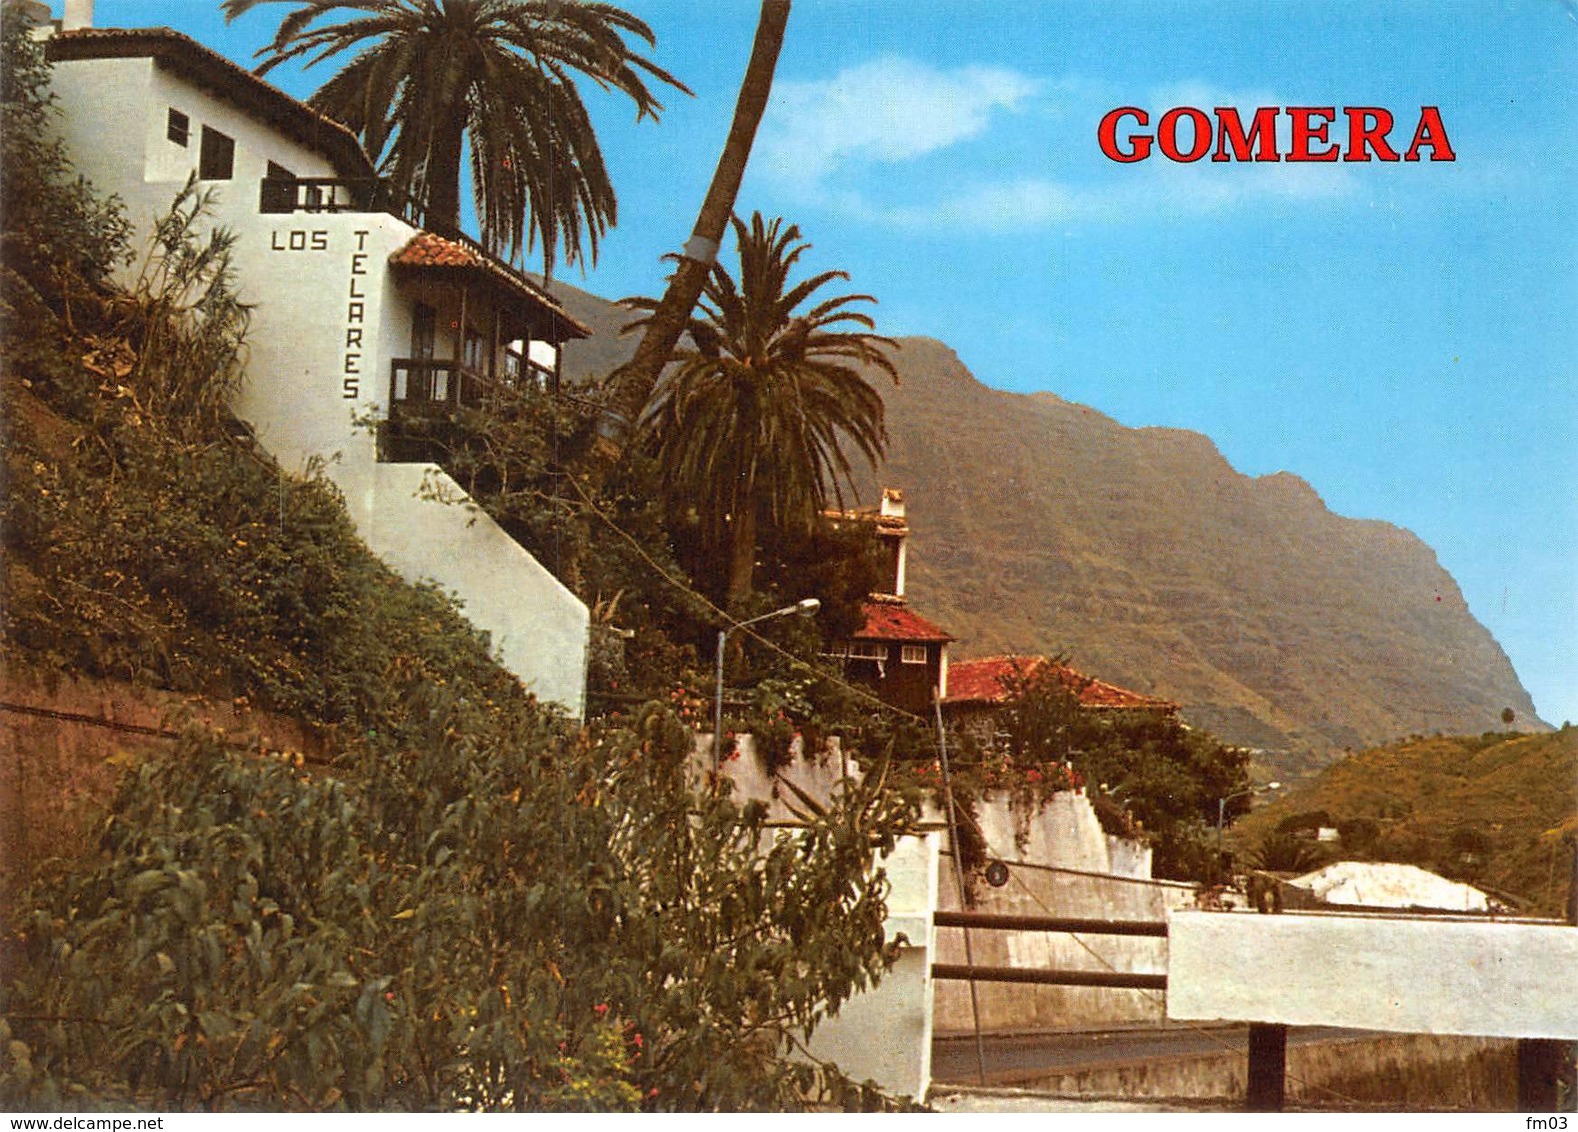 Gomera - Gomera